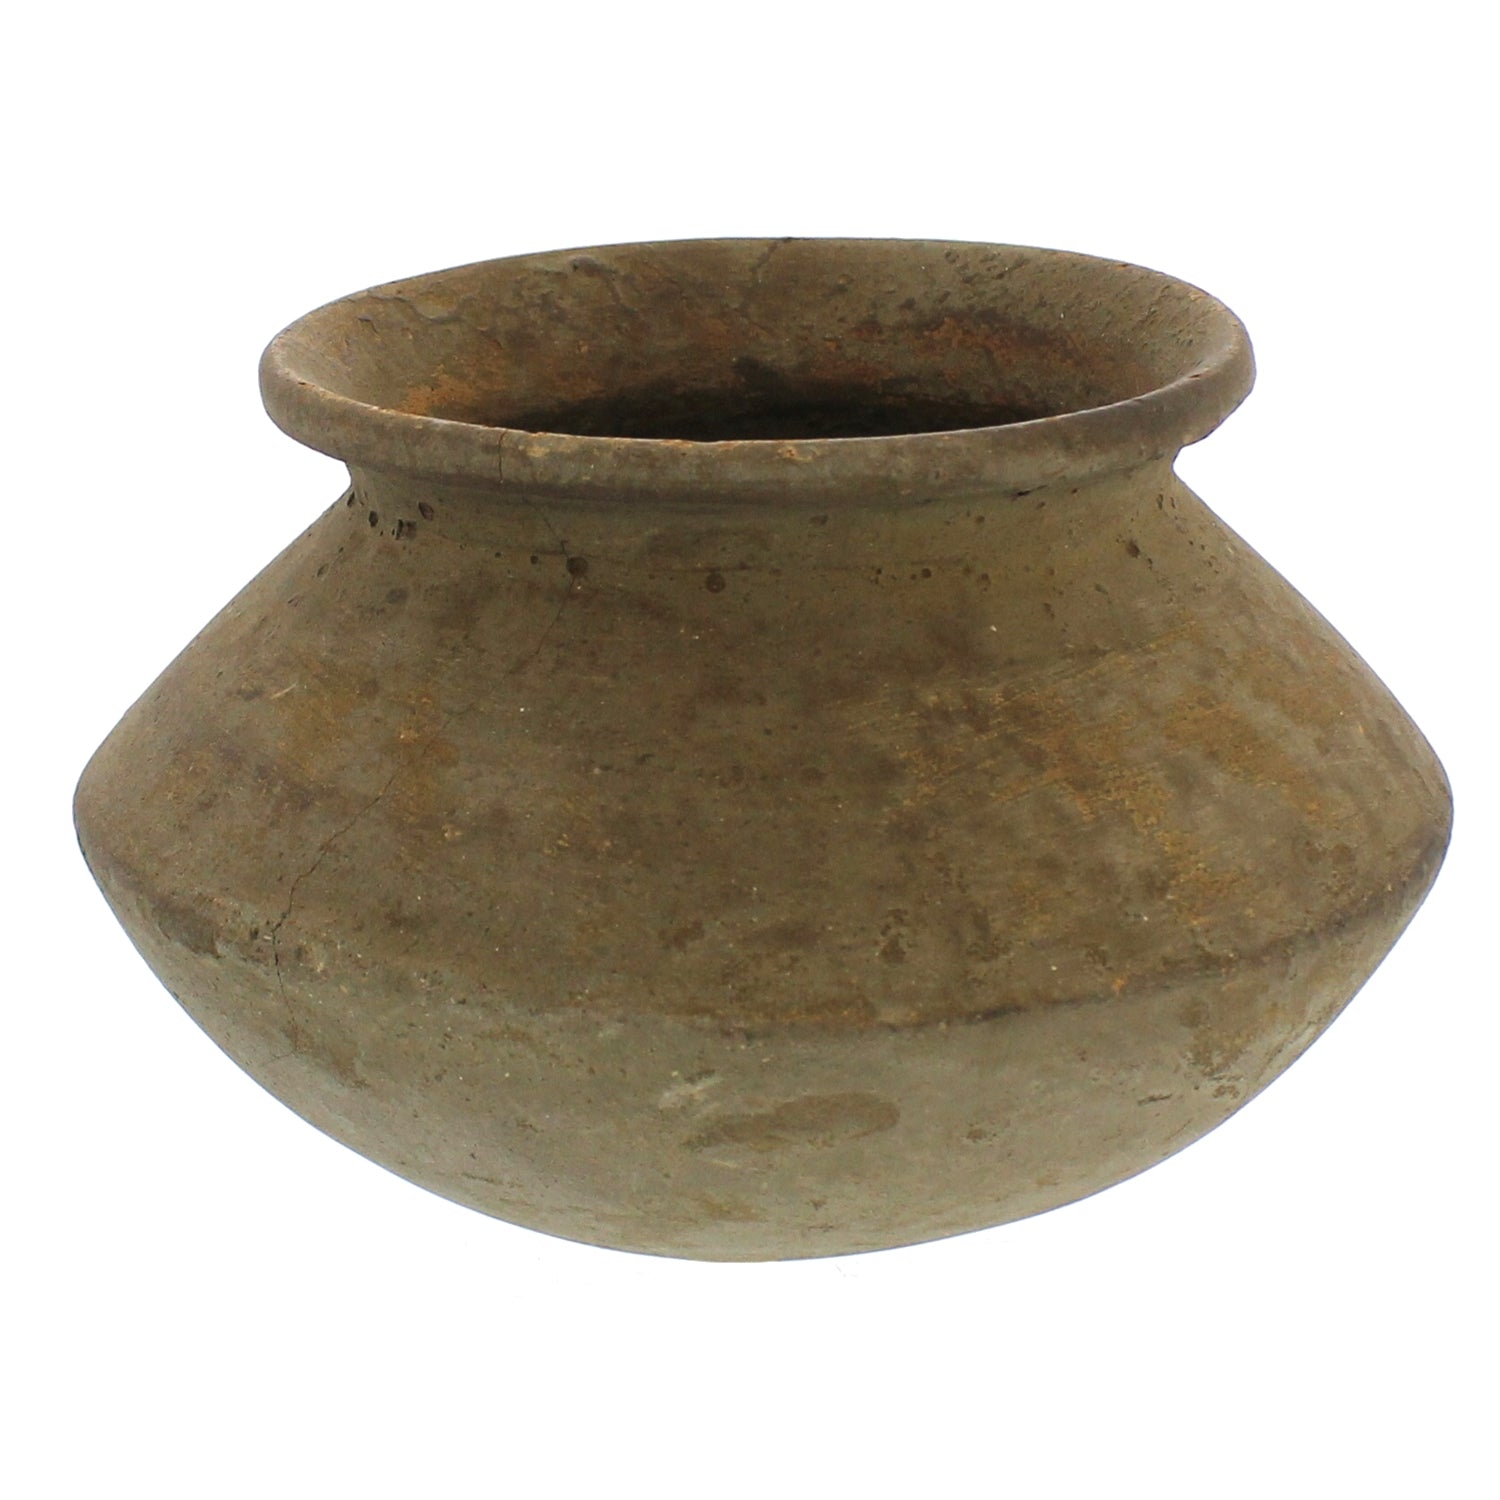 Found Clay Pot (5664658030749)